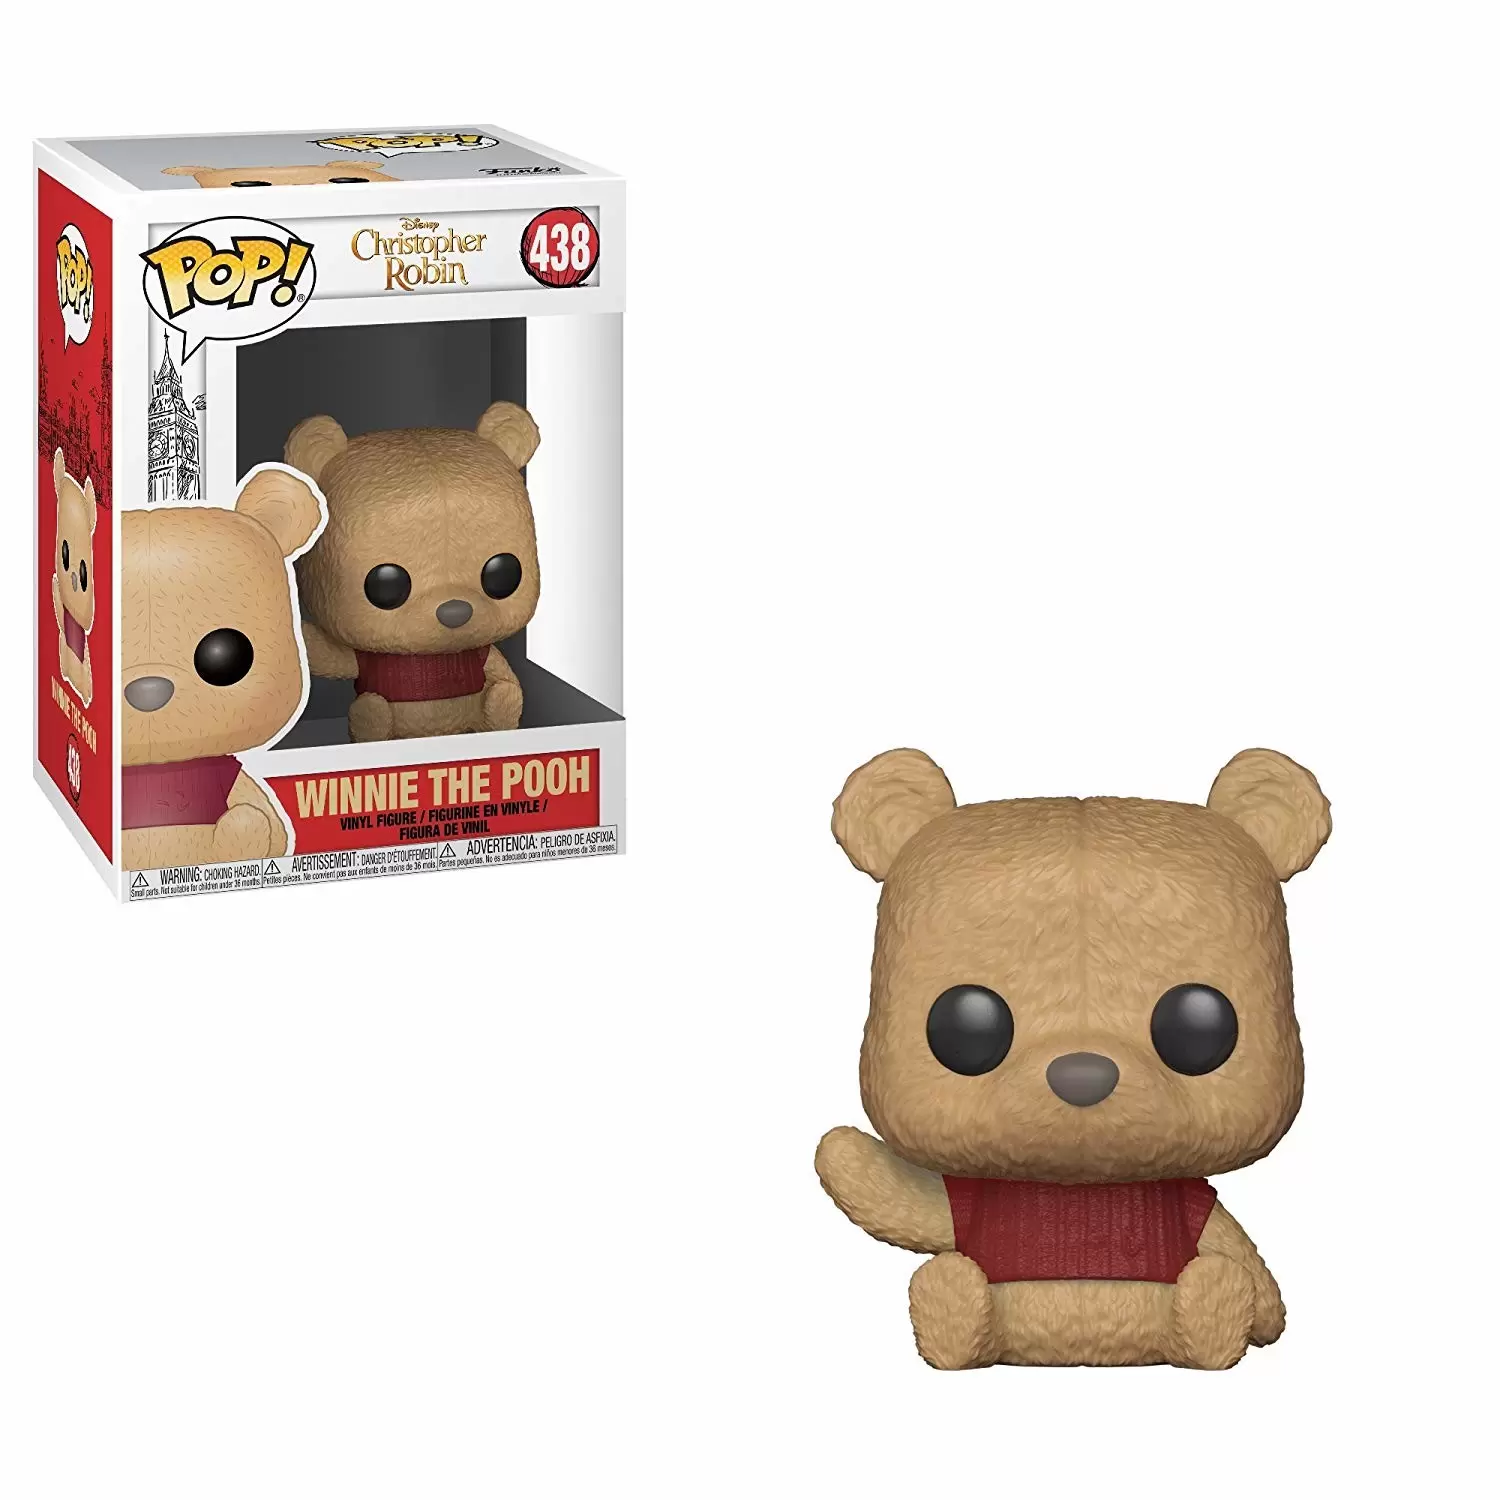 POP! Disney - Christopher Robin - Winnie The Pooh